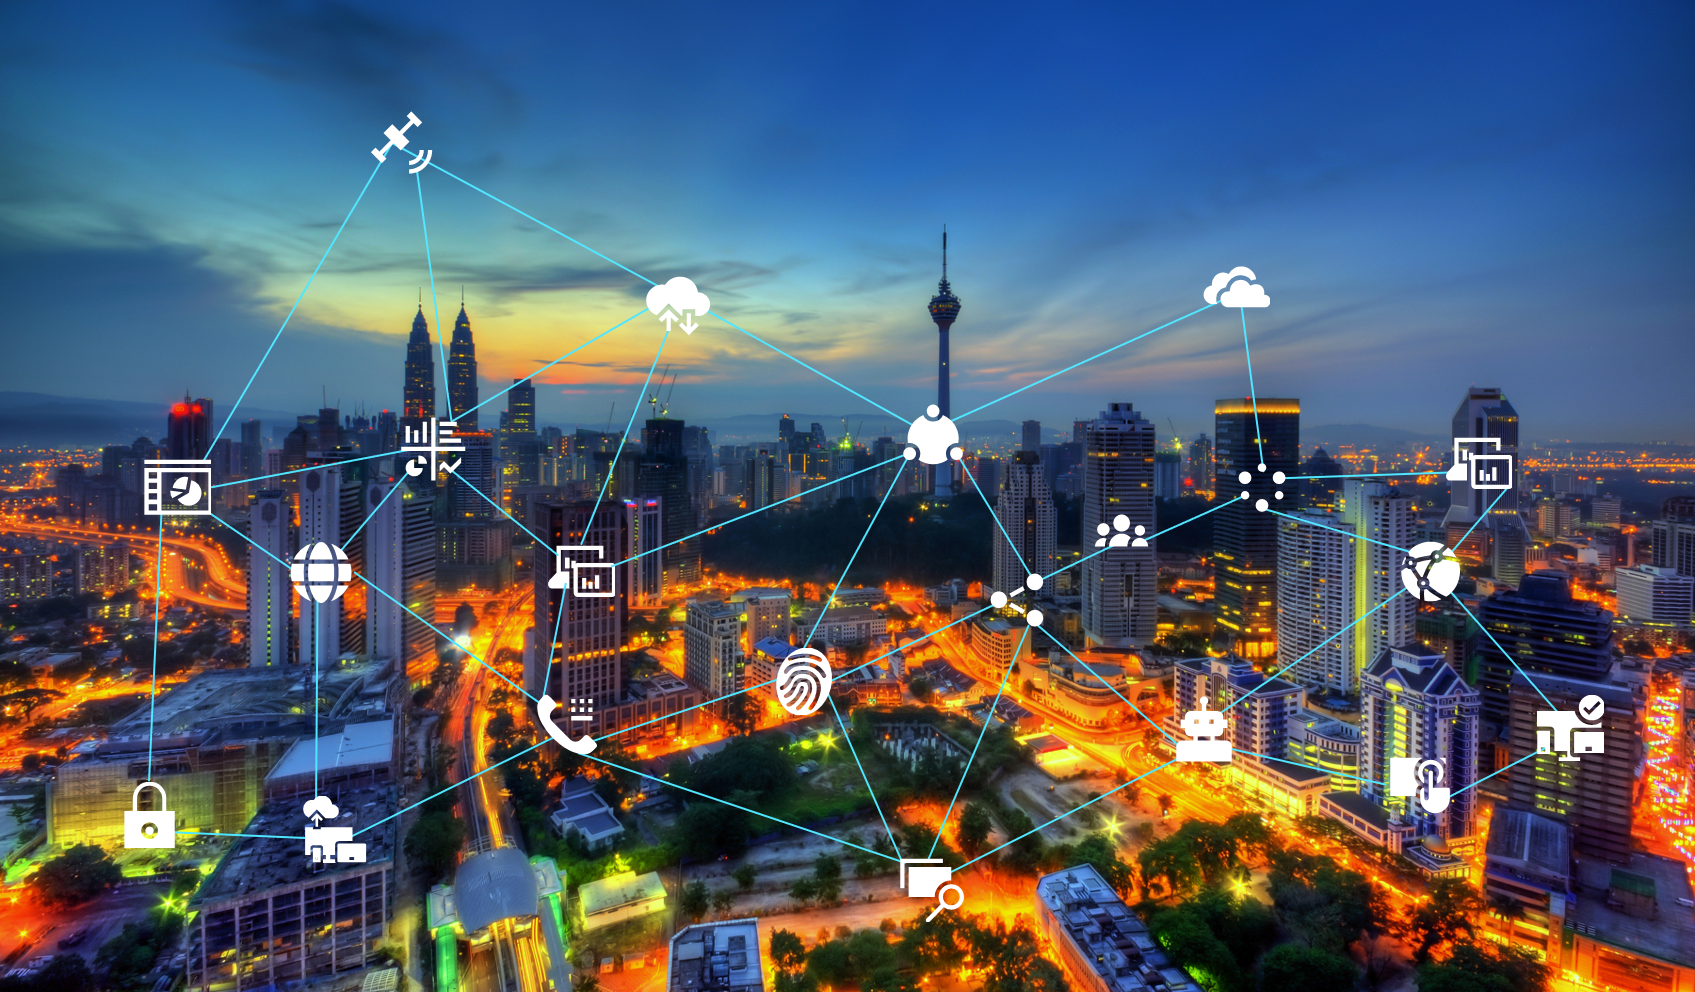 Kuala Lumpur Malaysia night skyline overlayed with technology icons to illustrate digital transformation